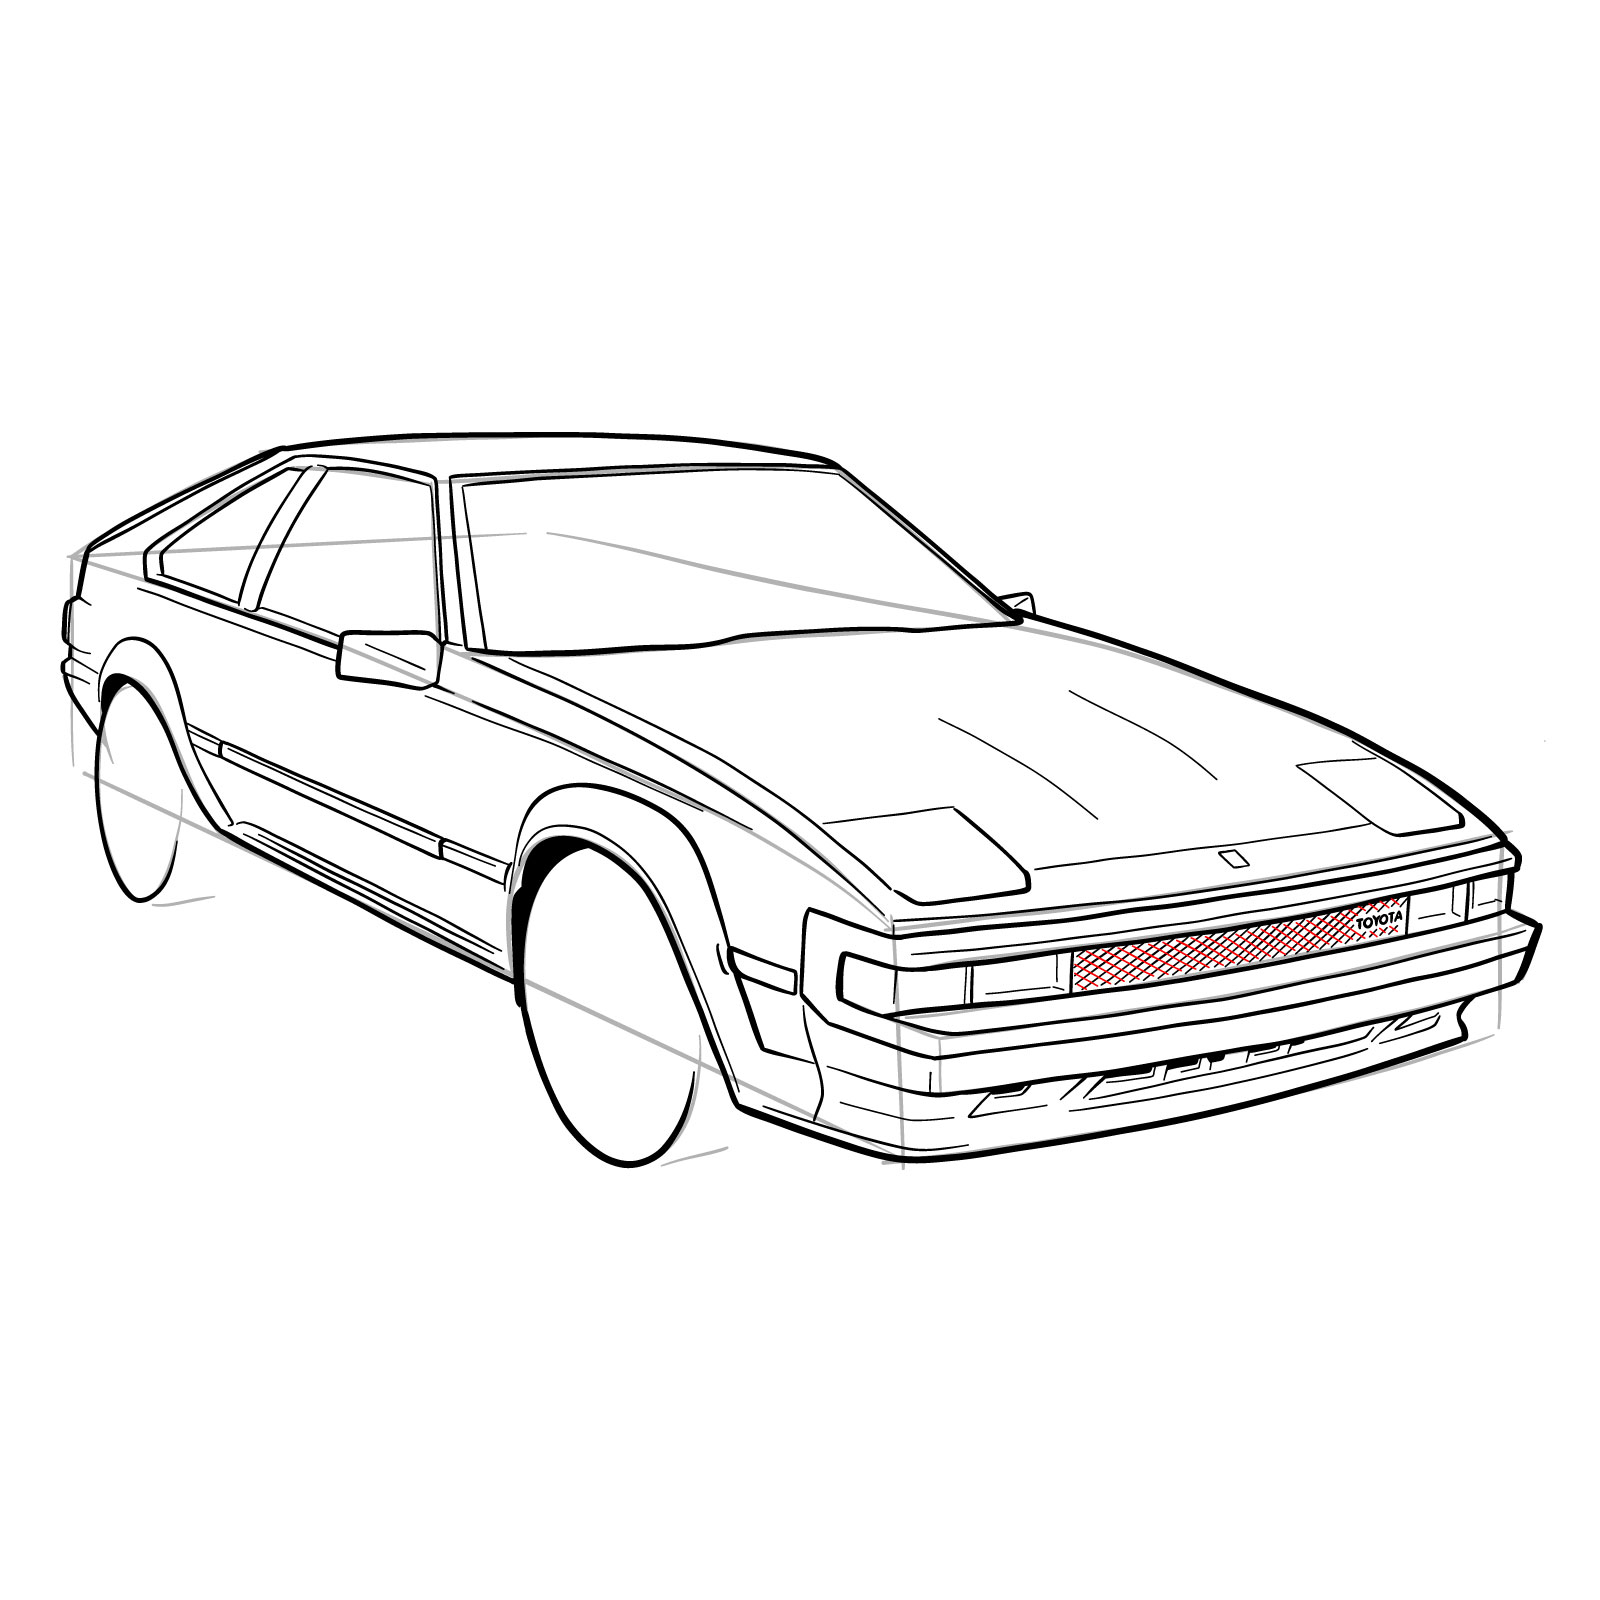 How to draw a 1985 Toyota Celica Supra P Type MK 2 - step 32